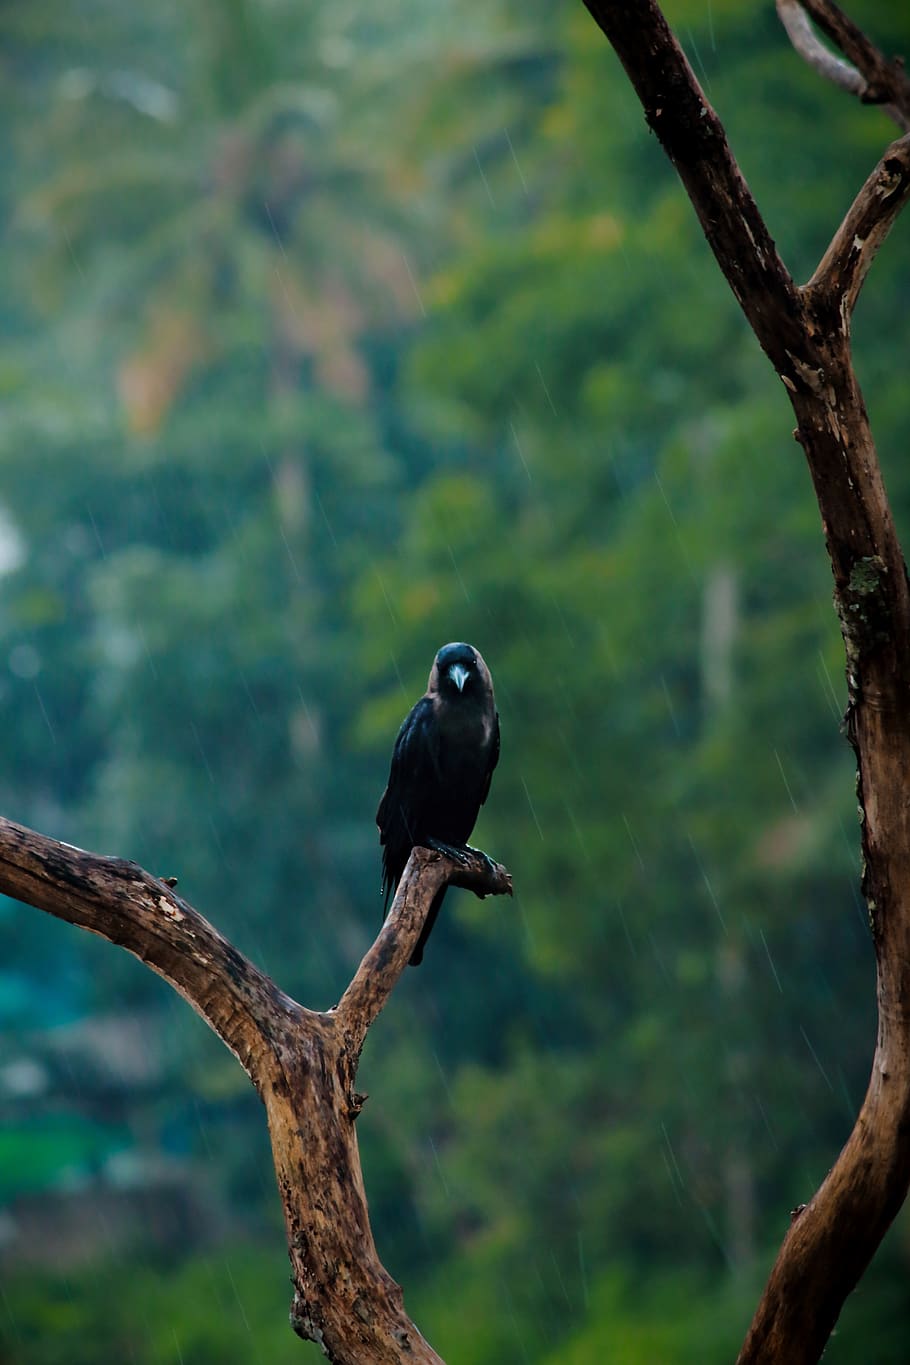 cuervo, lluvia, negro, verde, kerala, solo, sentado, mirando, árbol, naturaleza